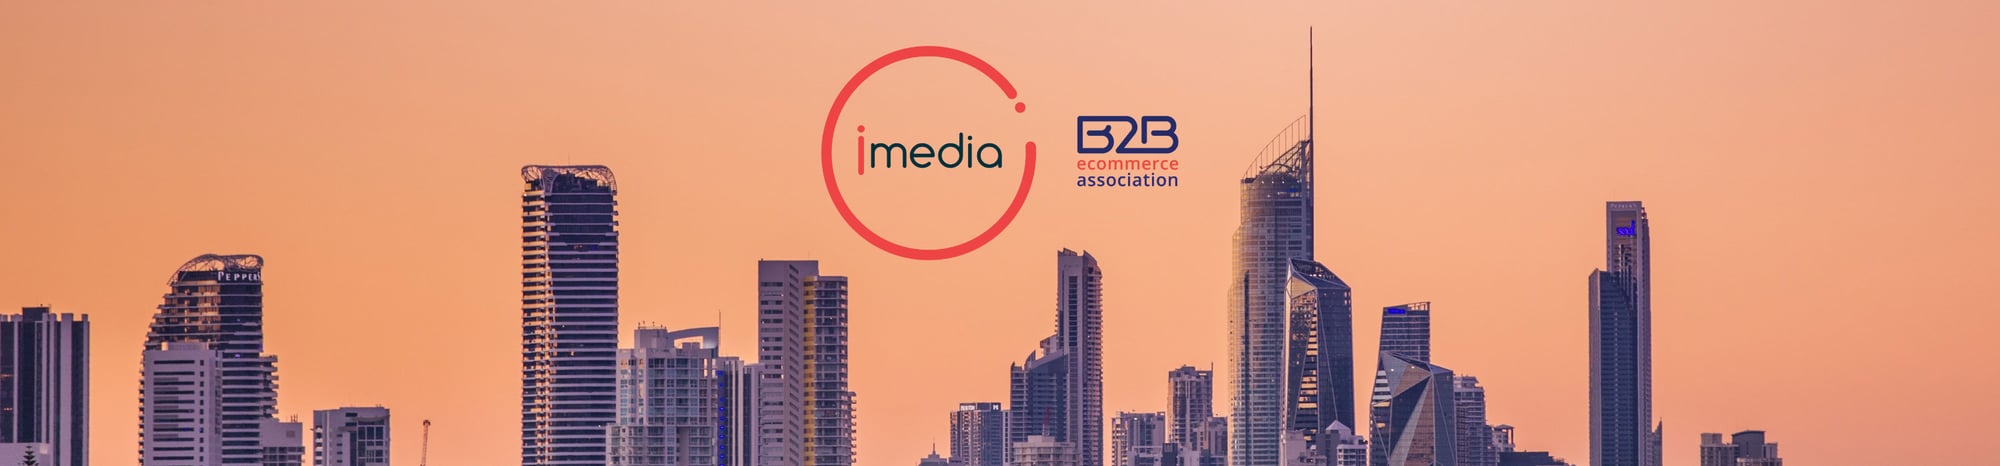 Register Your Interest in Attending iMedia B2B eCommerce Summit